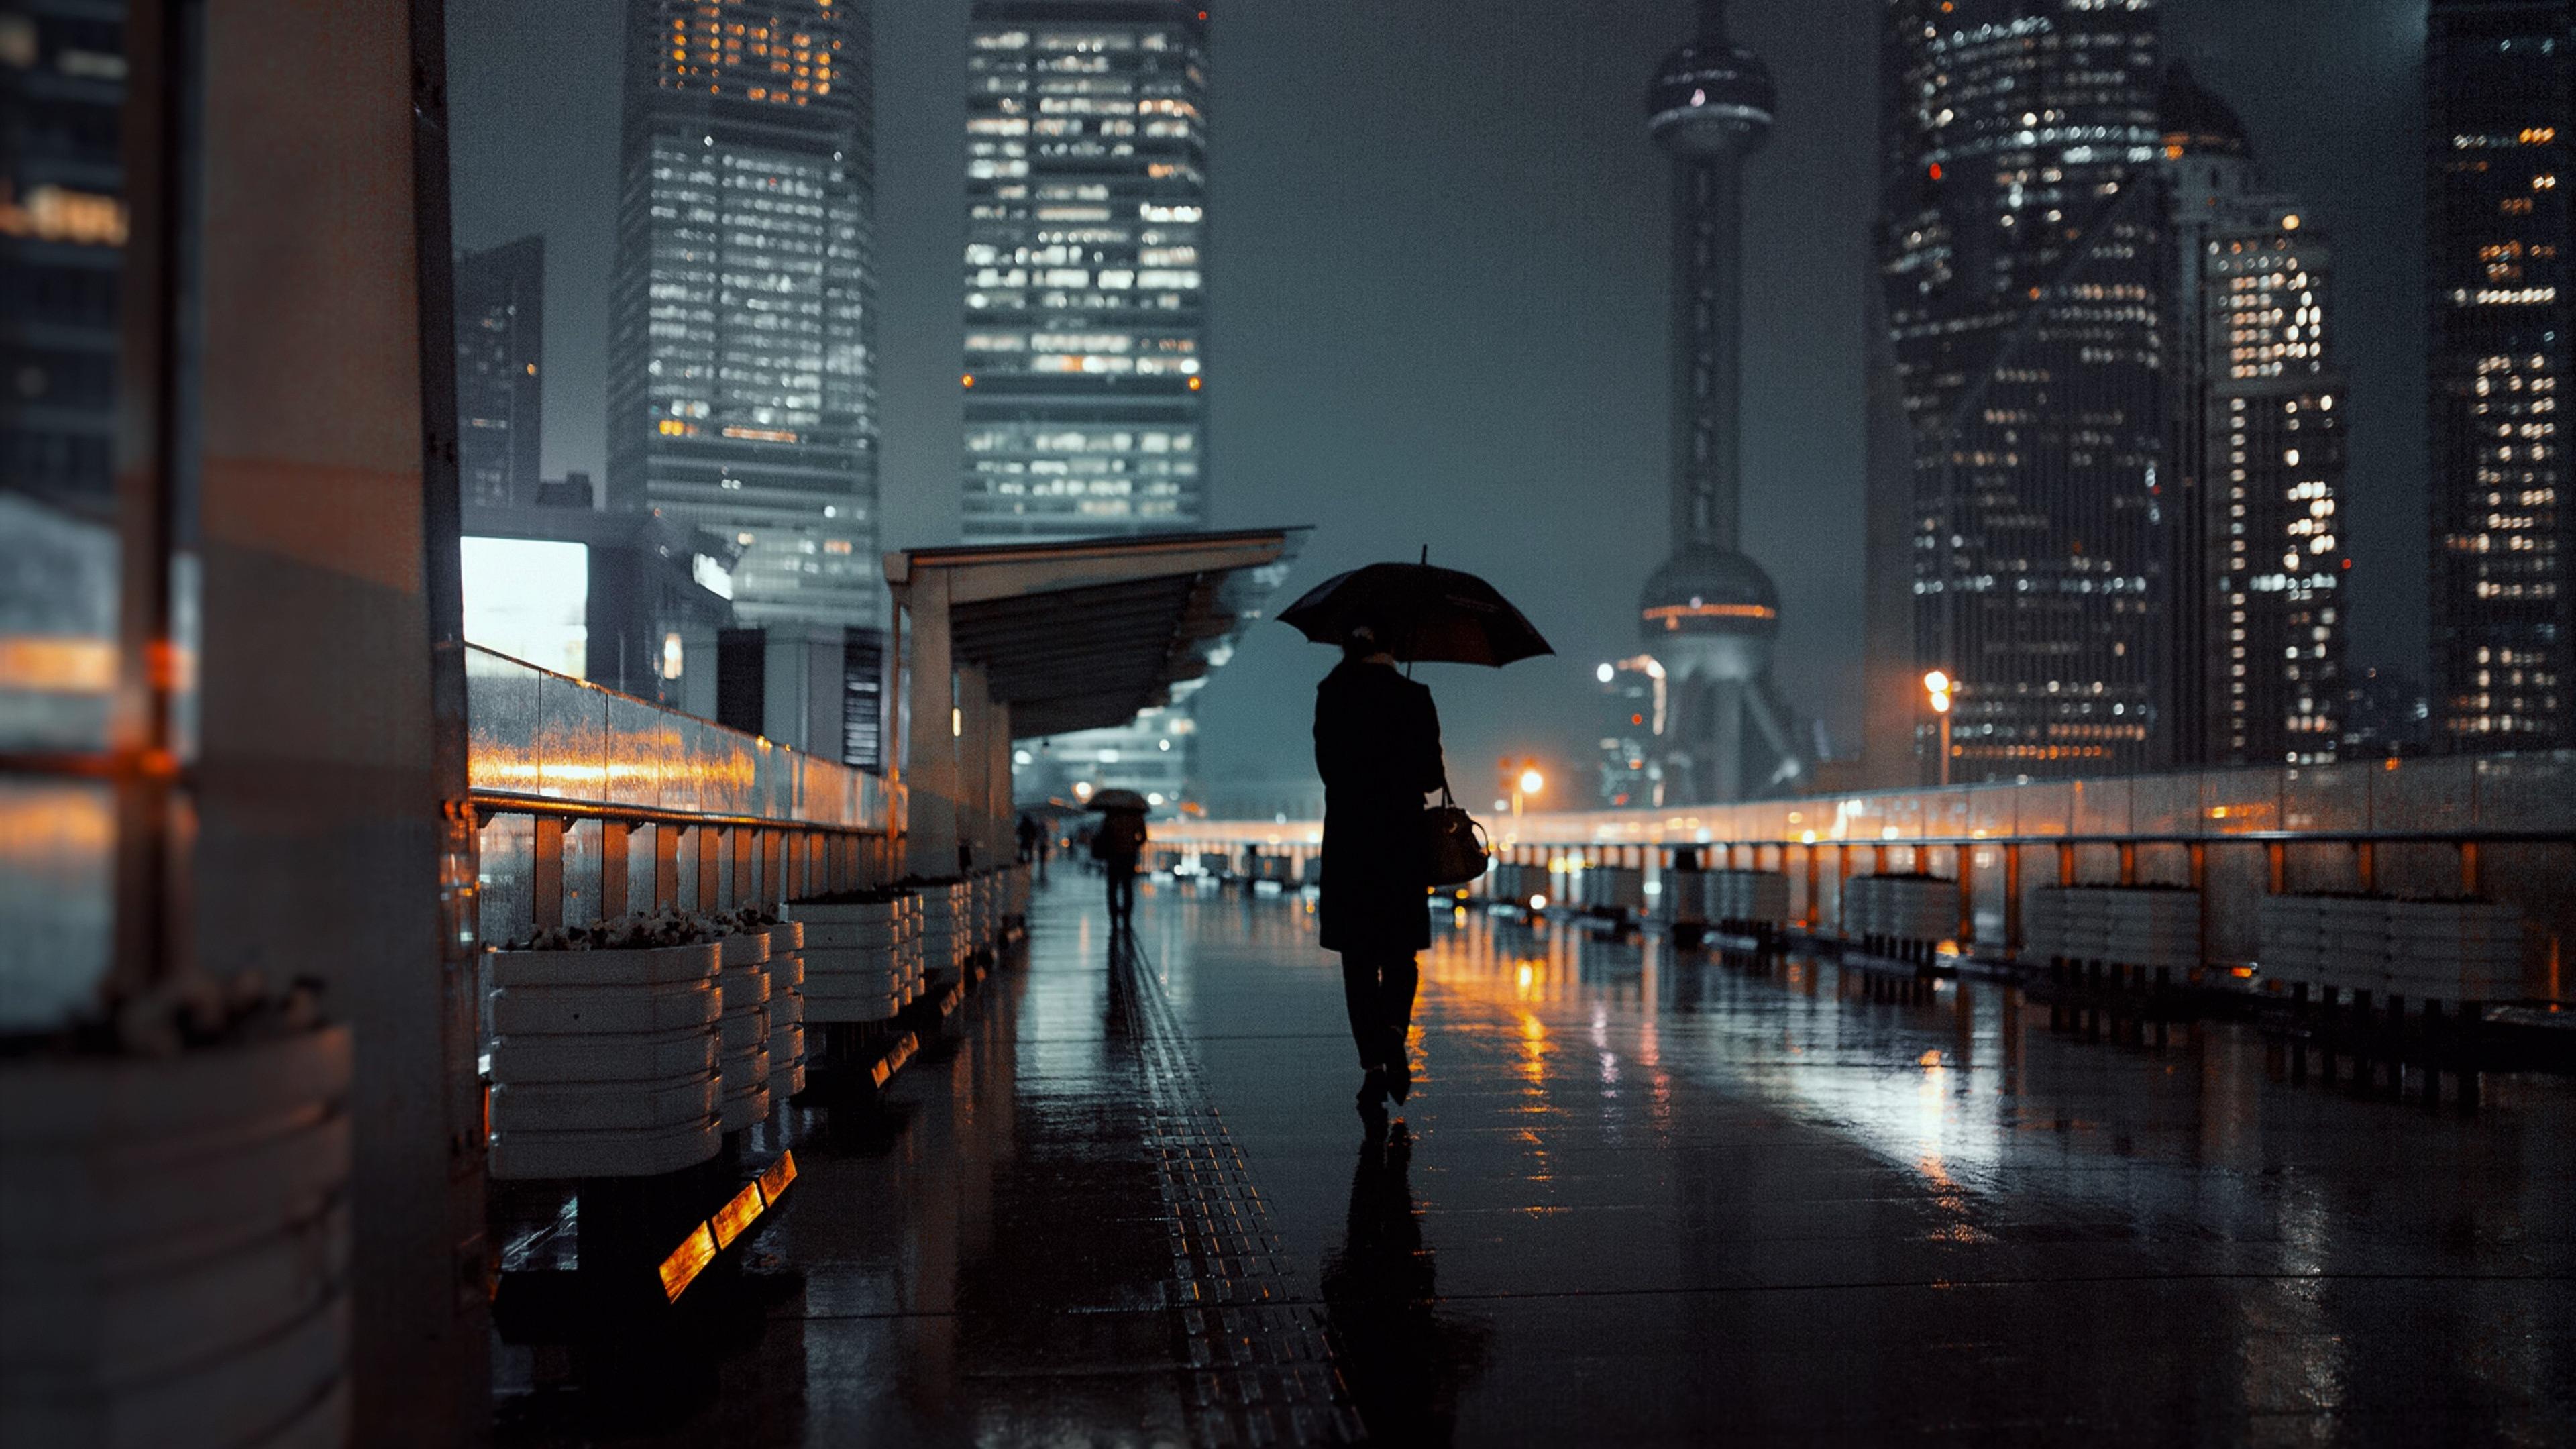 Rainy night in Shanghai wallpaper - backiee